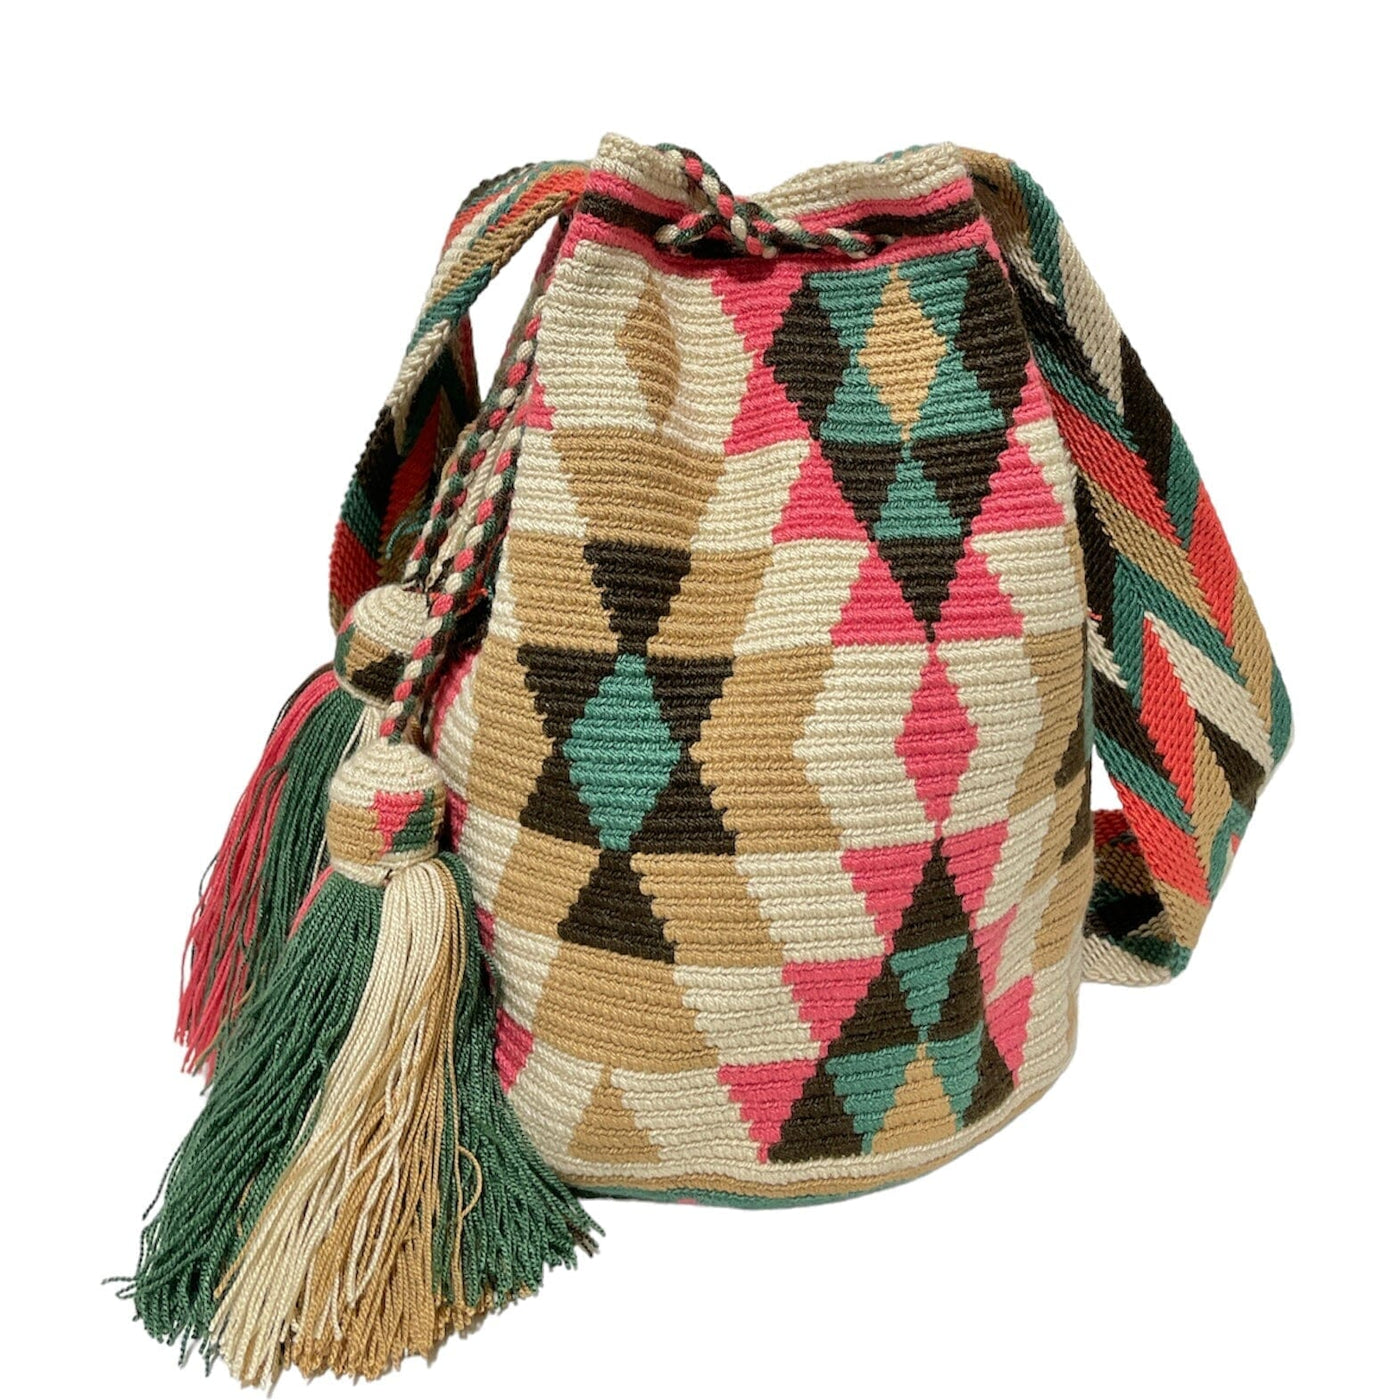 Desert Dreams Crochet Bags (L) - Earth Tones Crossbody Crochet Boho Bag - Traditional Wayuu Design Diamonds 